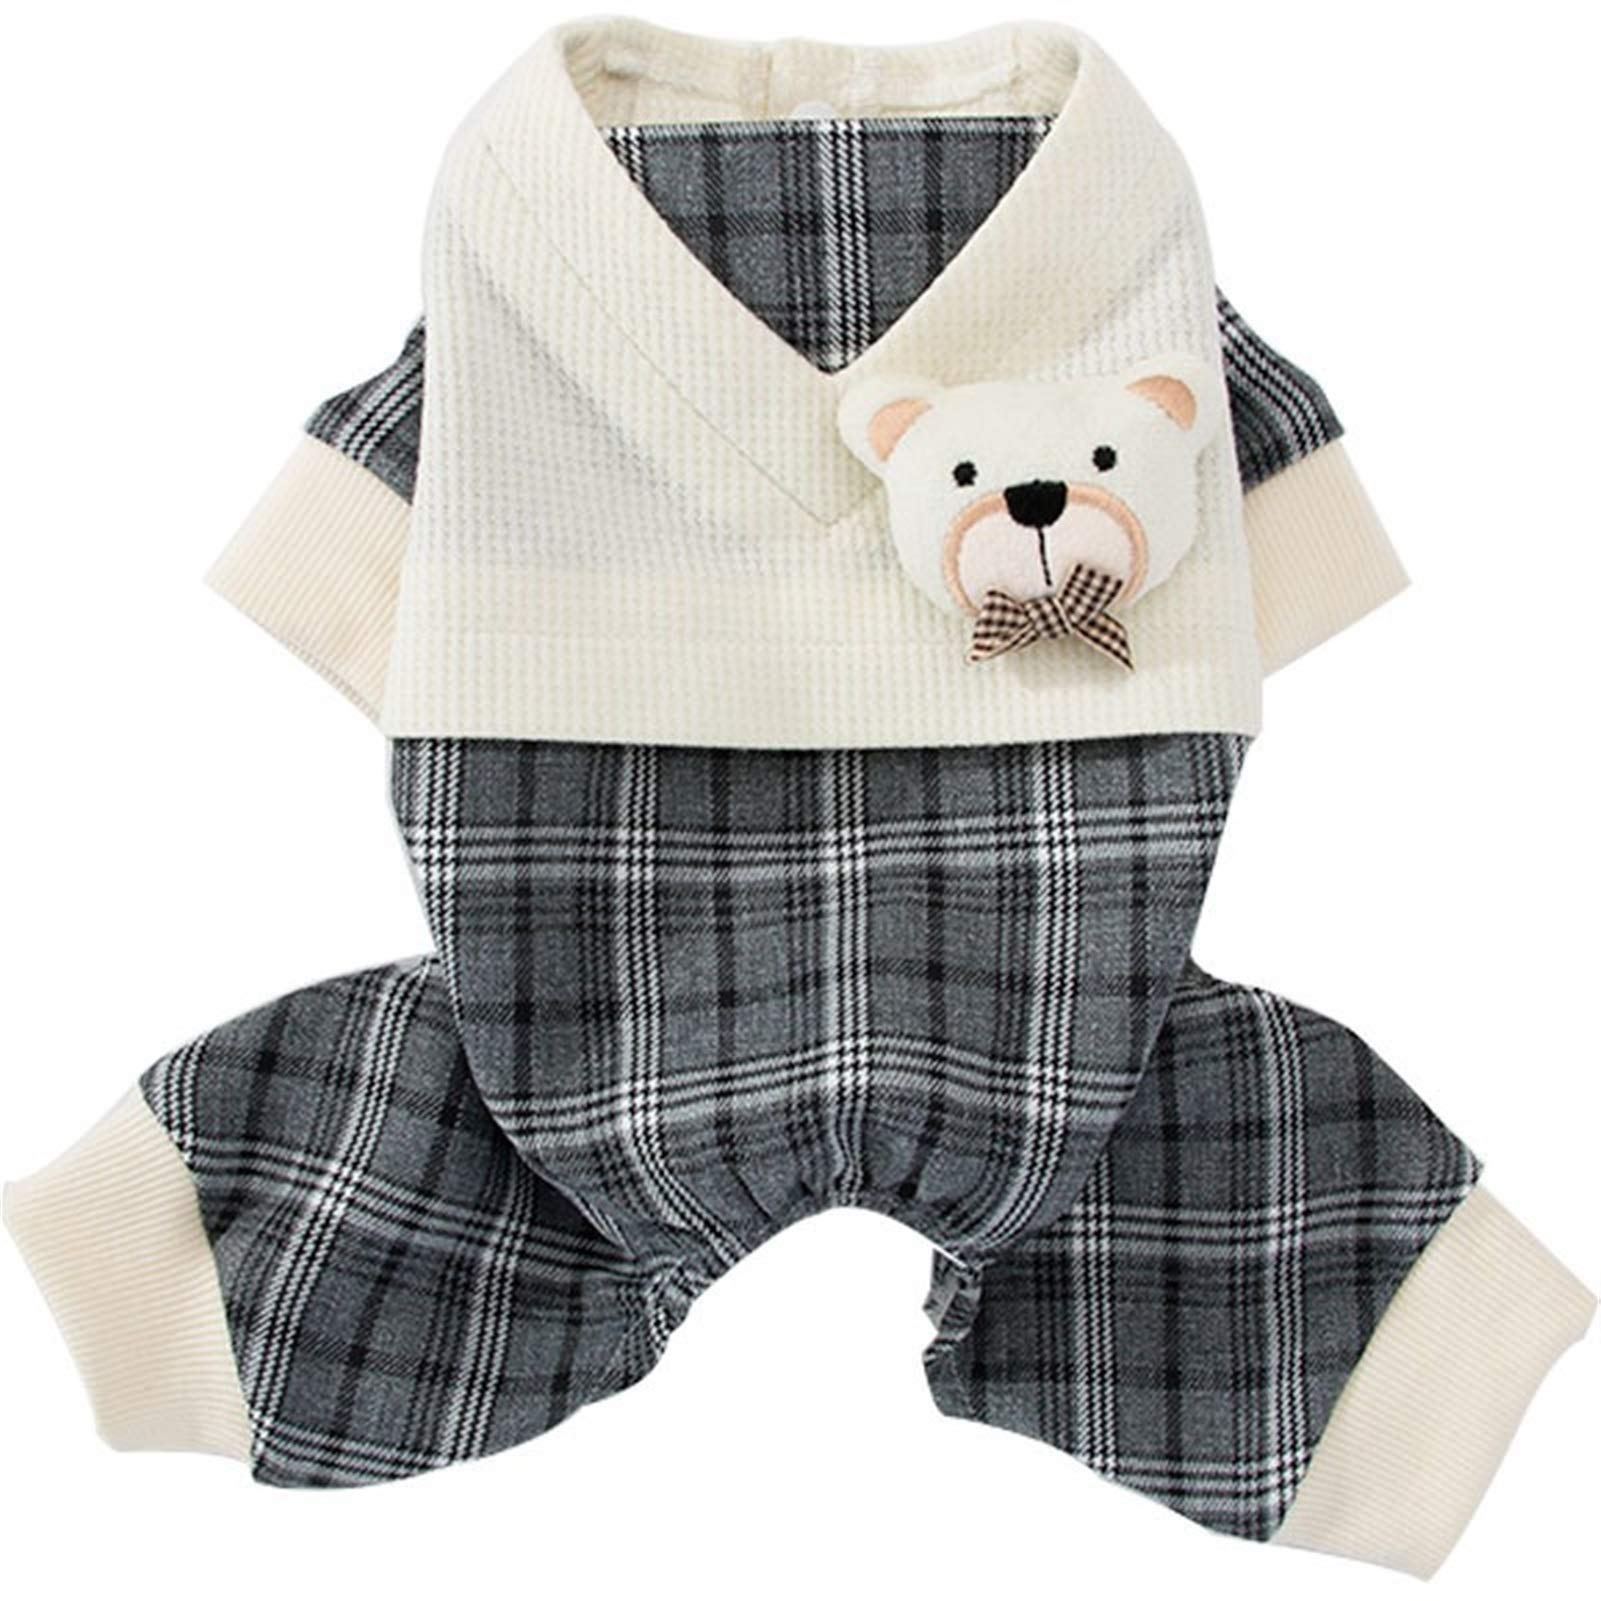 MMAWN Nette warme Hundekleidung für kleine Hunde Winter Baumwolle Hundekleidung Mantel Welpen Kostüm Pullover Mantel Chihuahua Outfits Ropa (Size : X-Large)